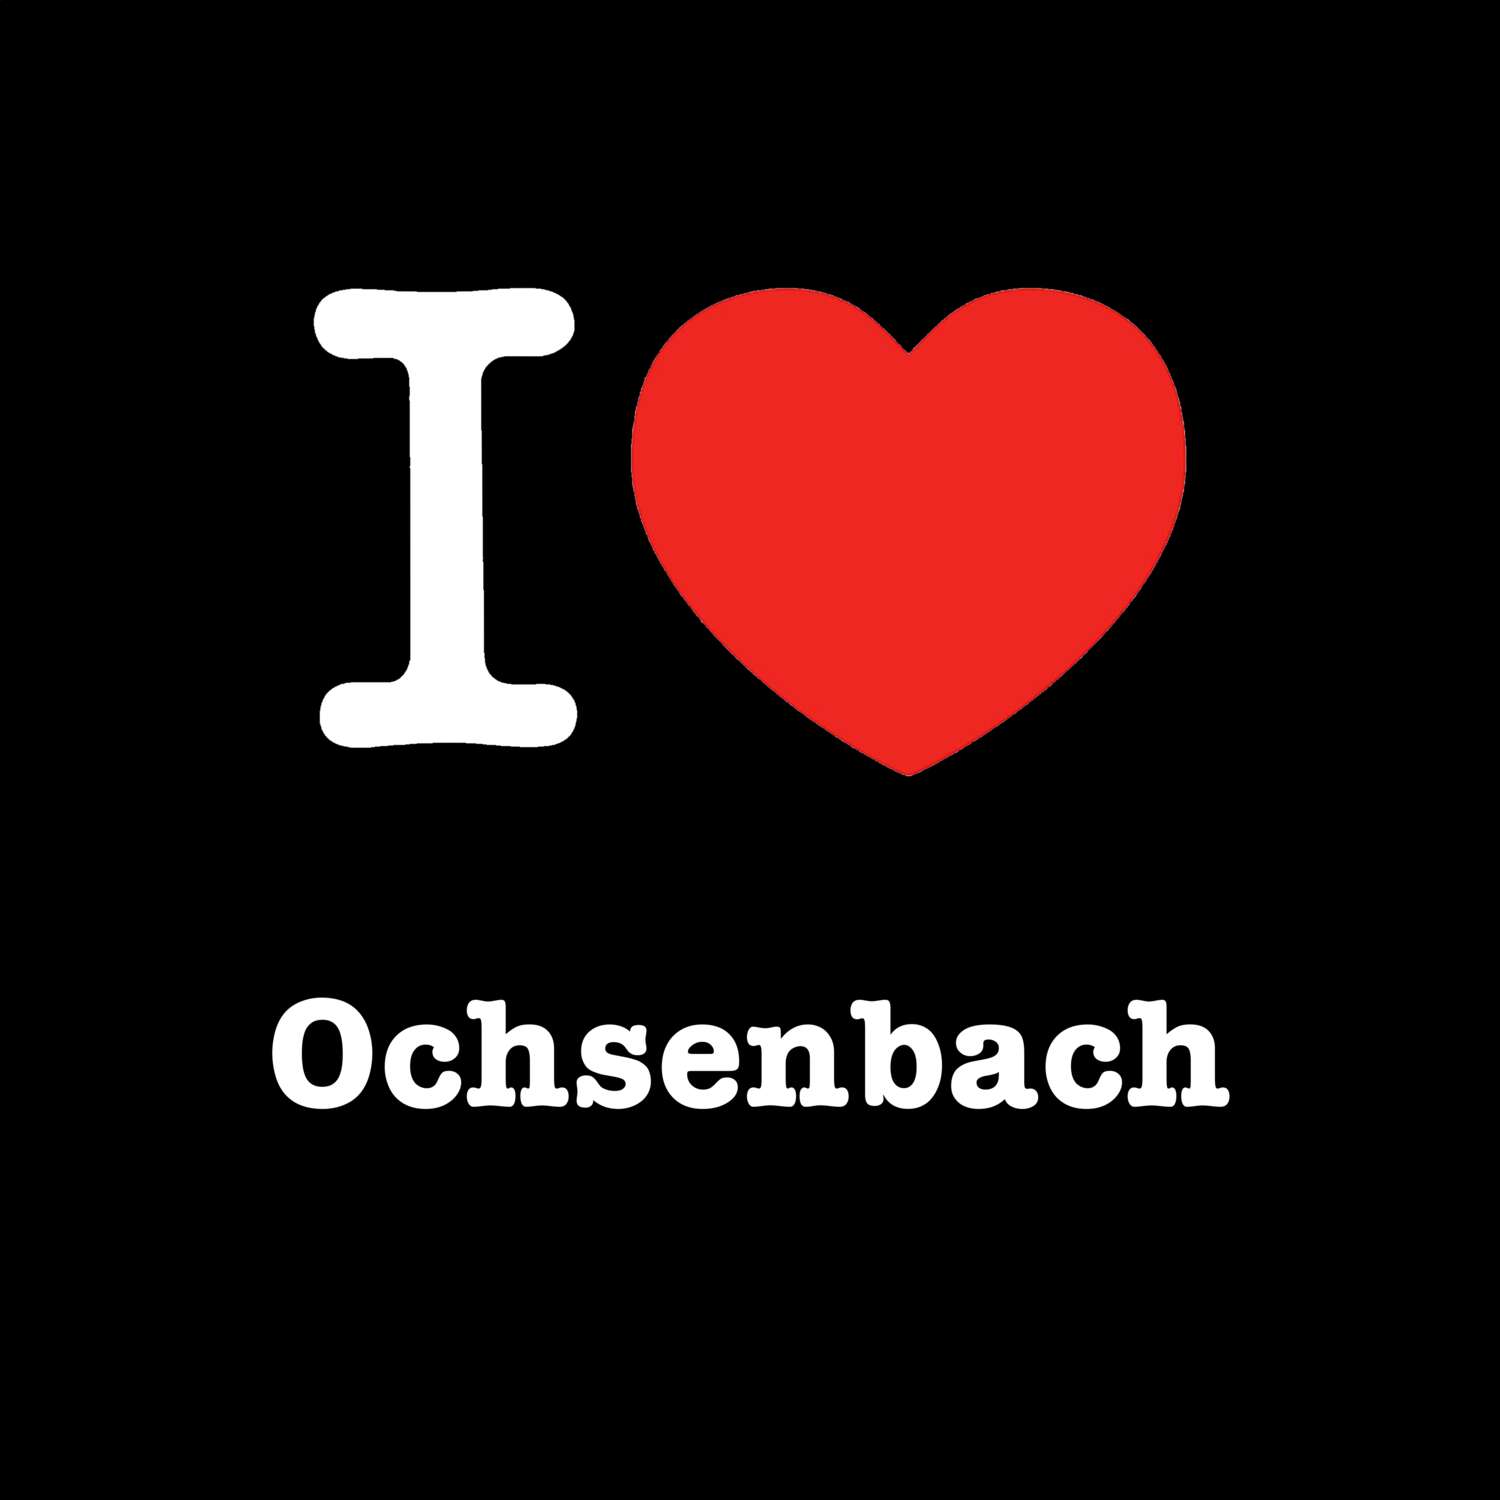 Ochsenbach T-Shirt »I love«